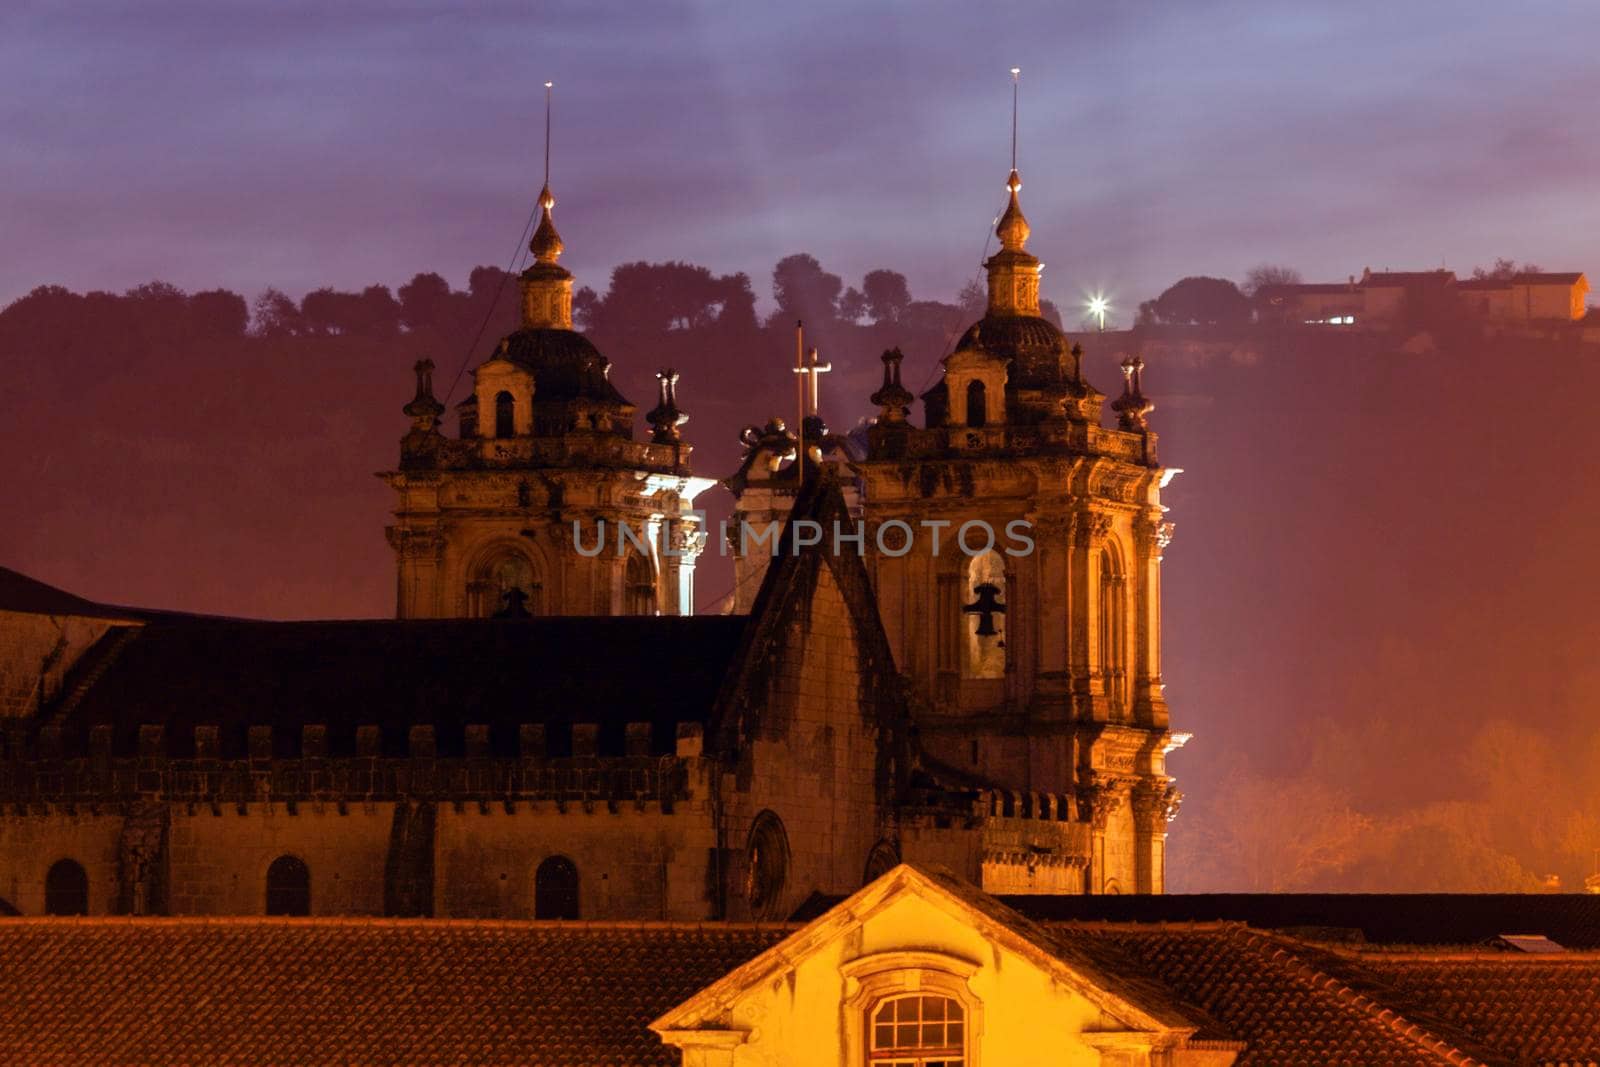 Alcobaca Monastery at sunset. Alcobaca, Oesste, Portugal